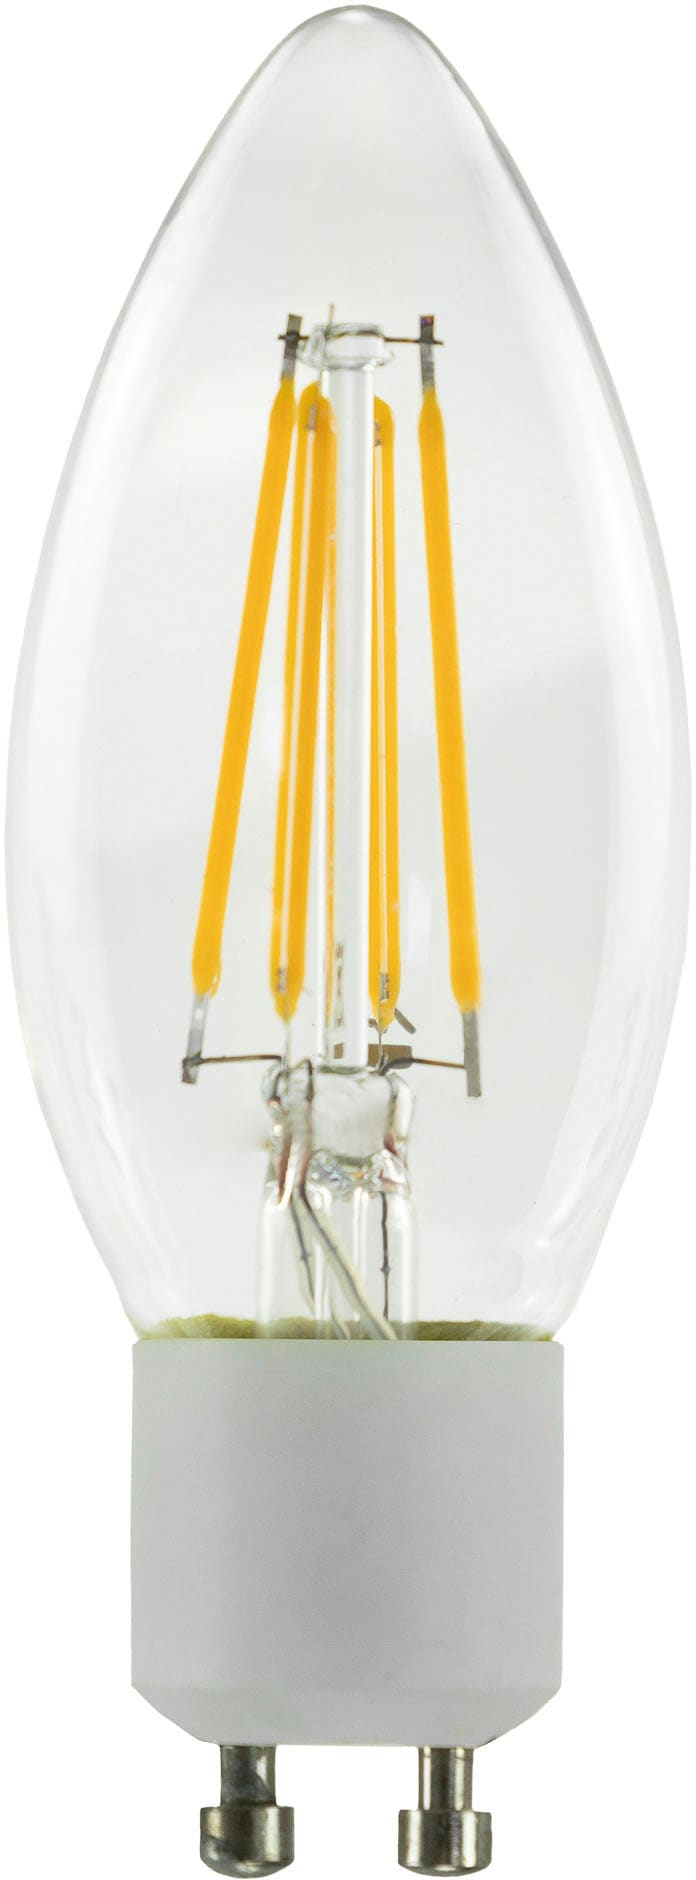 SEGULA LED-Leuchtmittel »LED Kerze - GU10«, GU10, 1 St., Warmweiß, LED Kerze - GU10, 2700K, klar, 3,2W, CRI 90, dimmbar